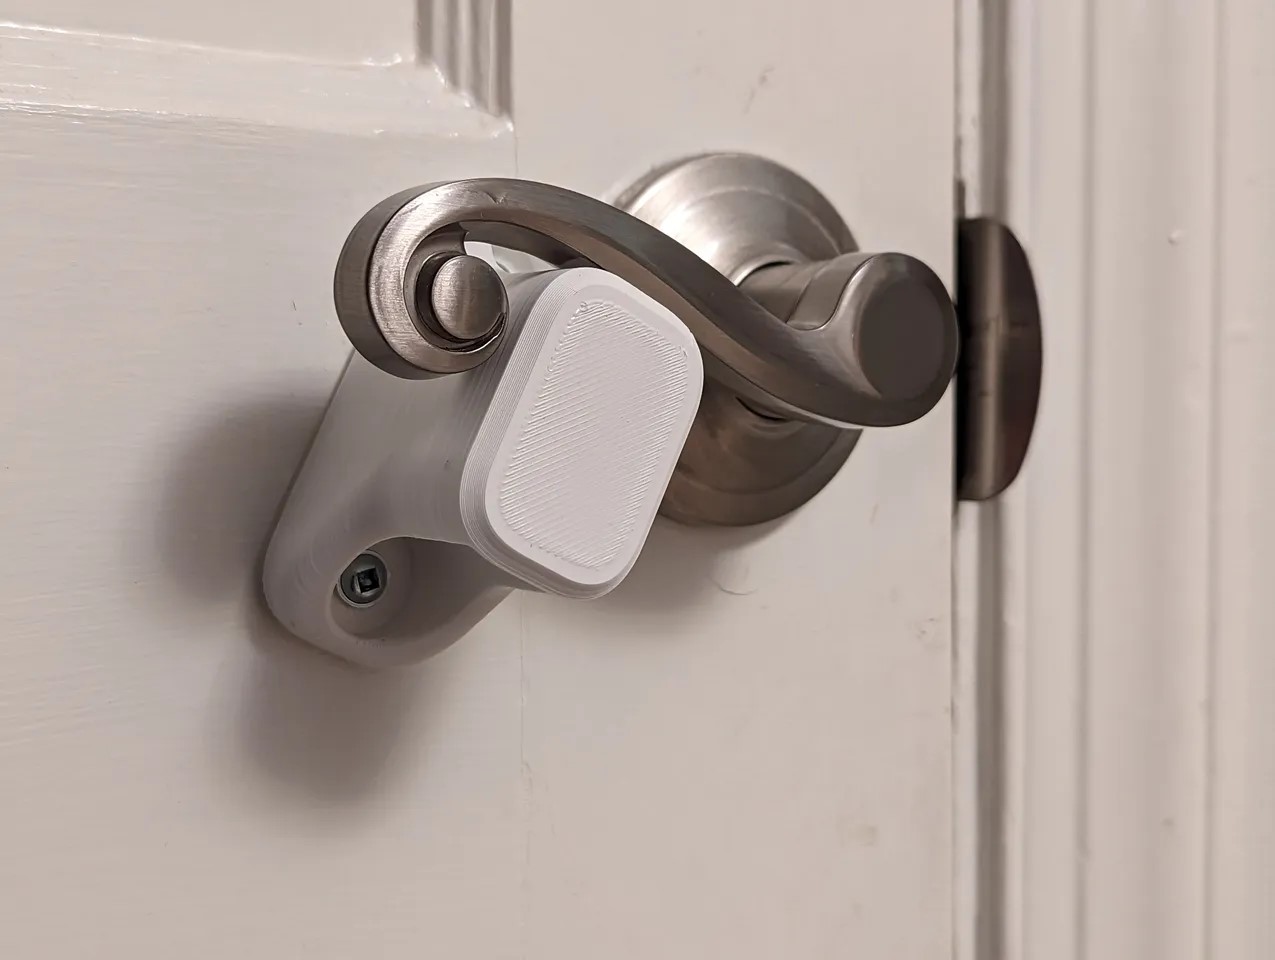 How To Open A Door With Child Lock